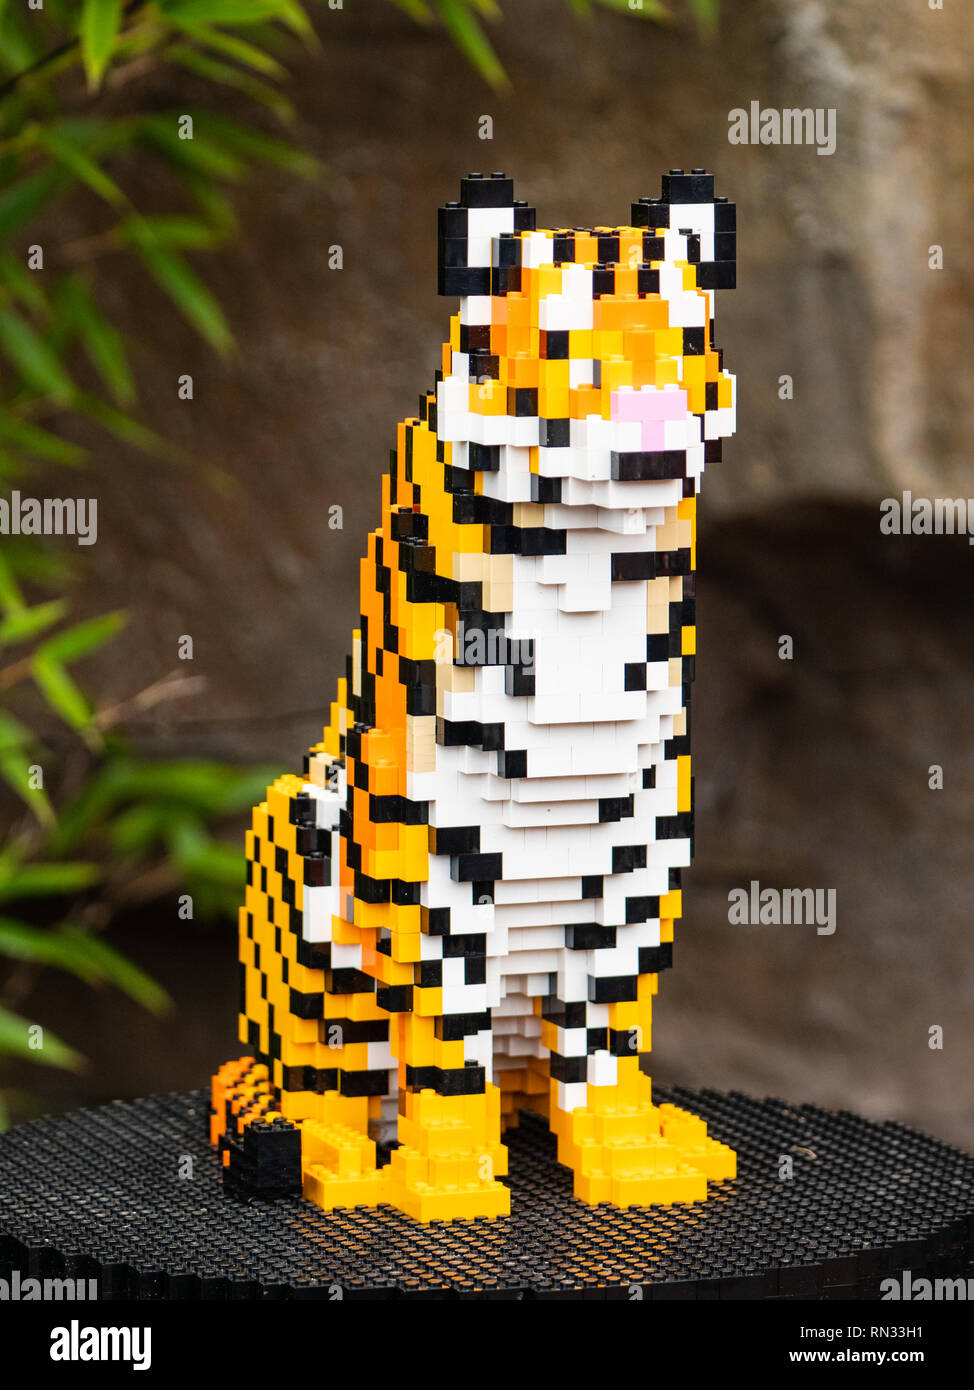 Sumatran tiger model, part of the Lego Brick Trail at Chester Zoo Stock Photo